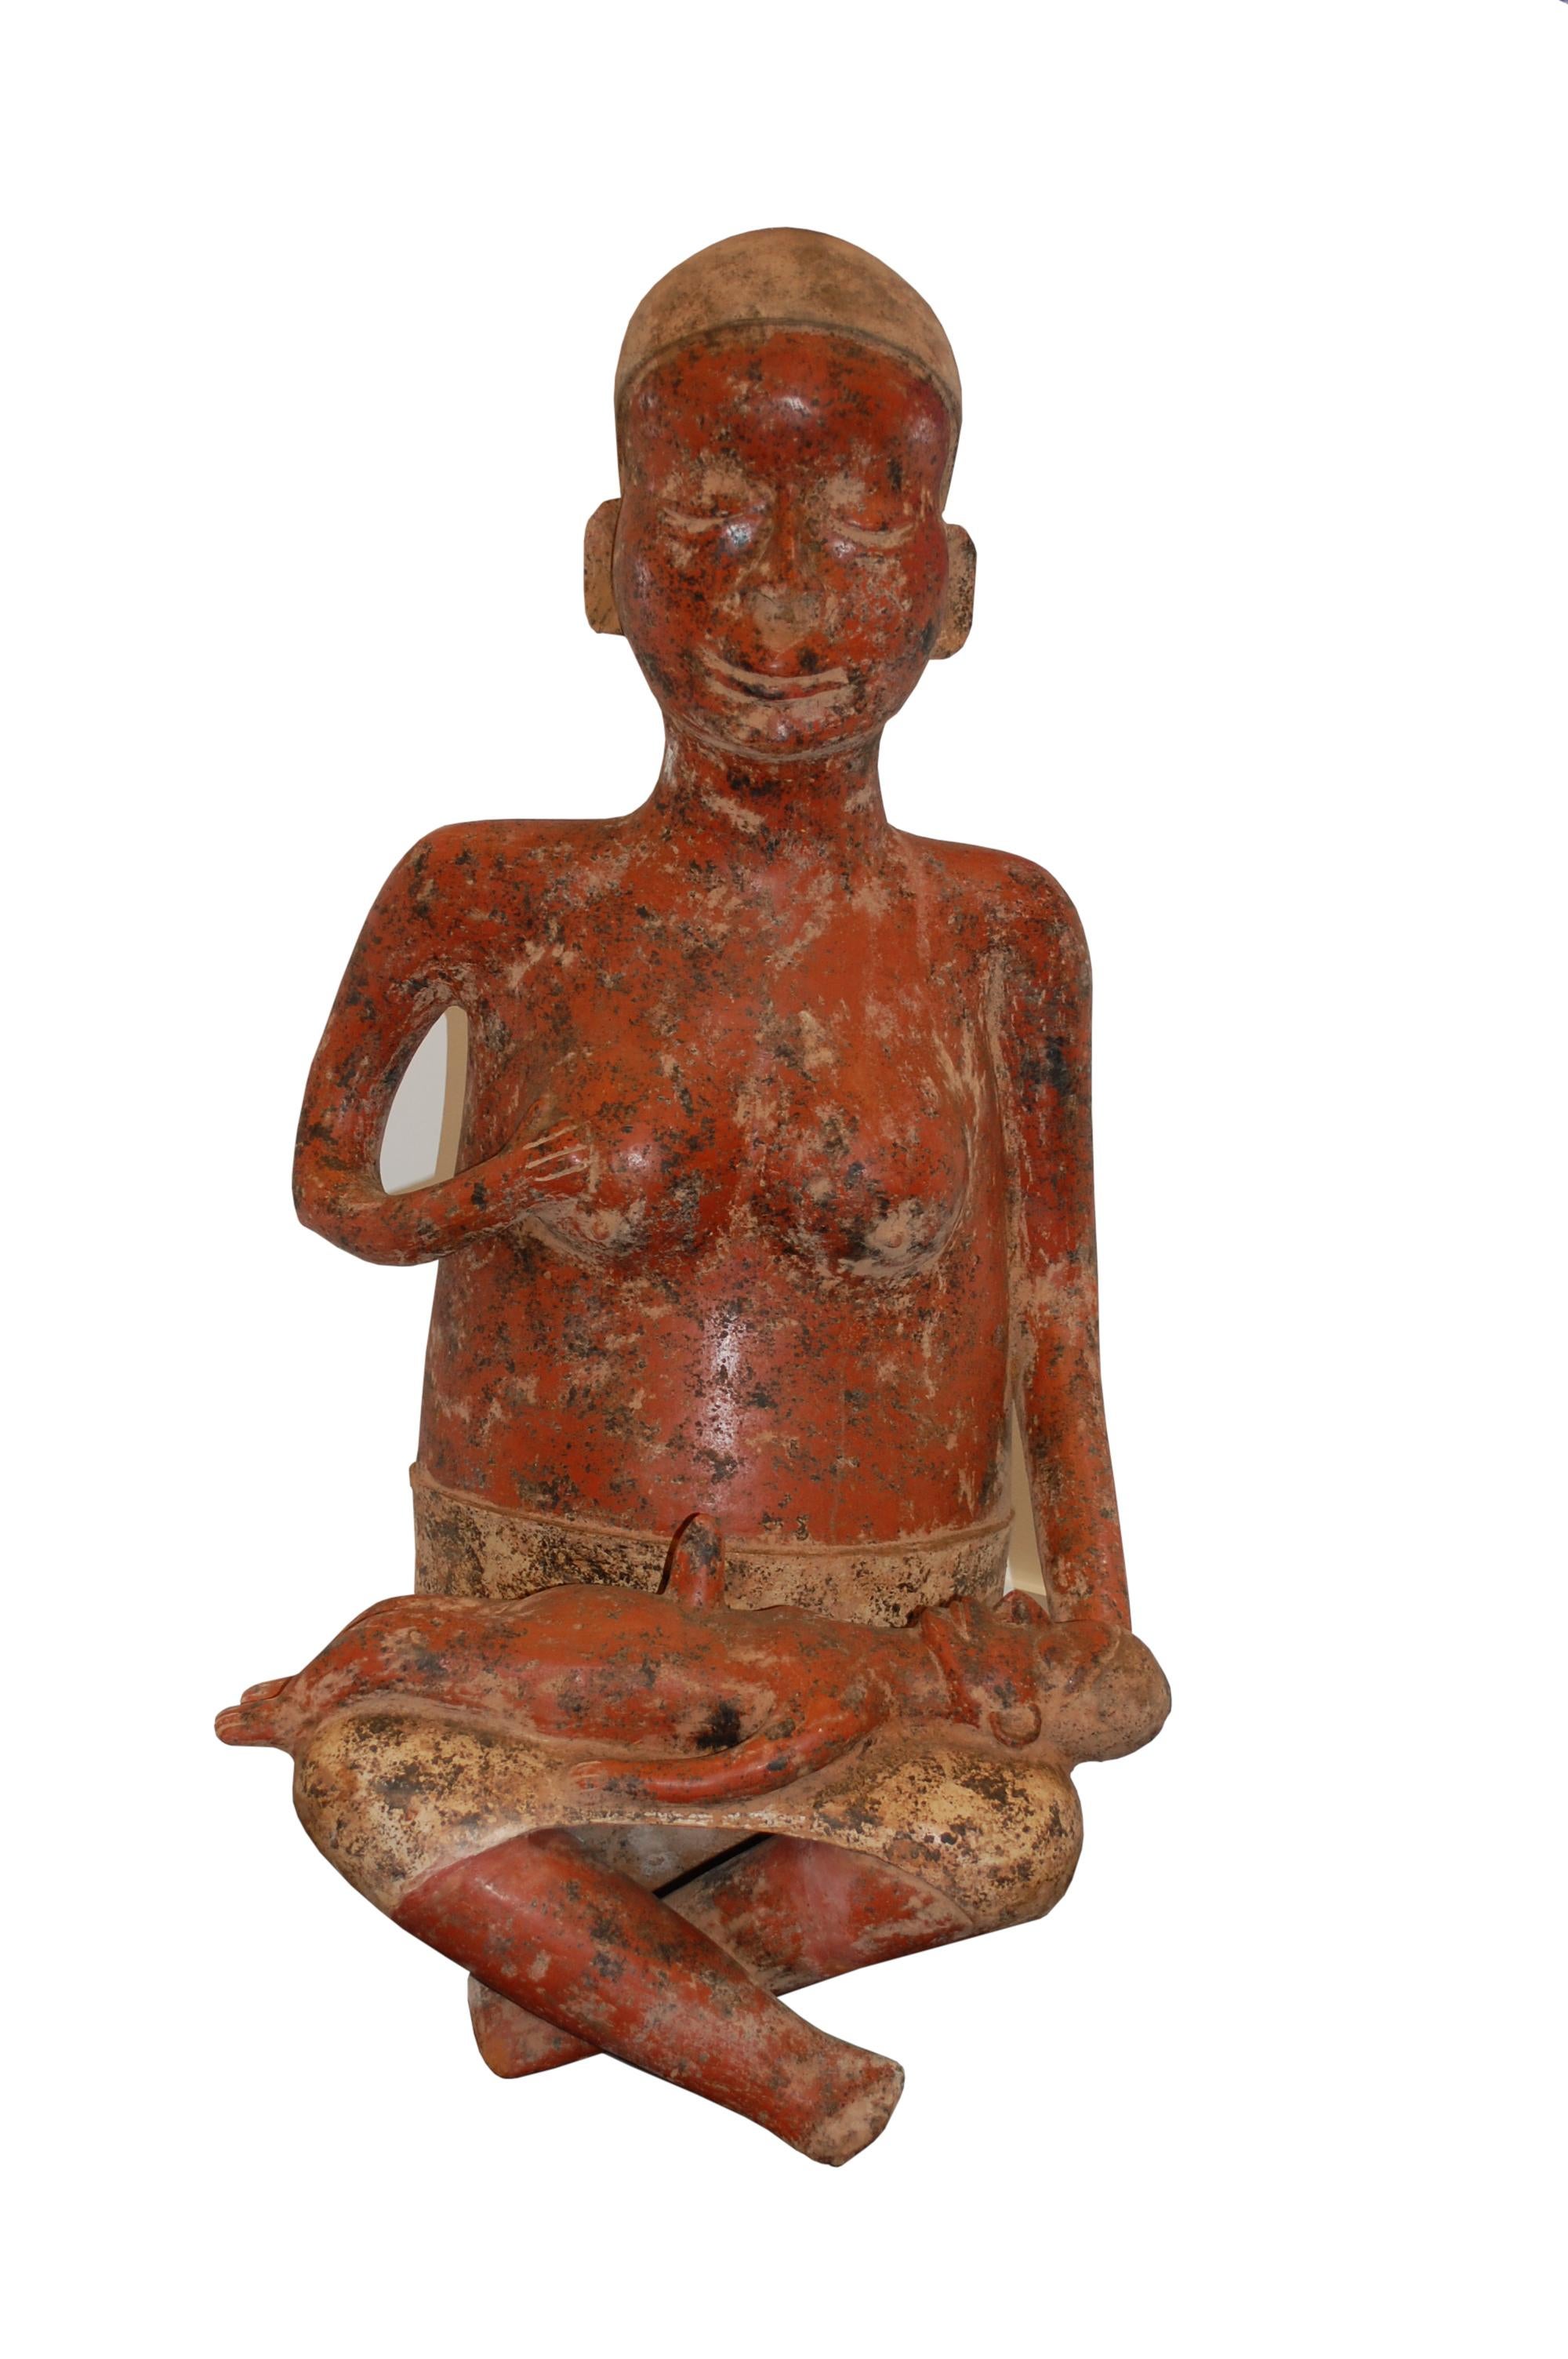   Sitzende Frau mit Kind, Terrakotta-Skulptur